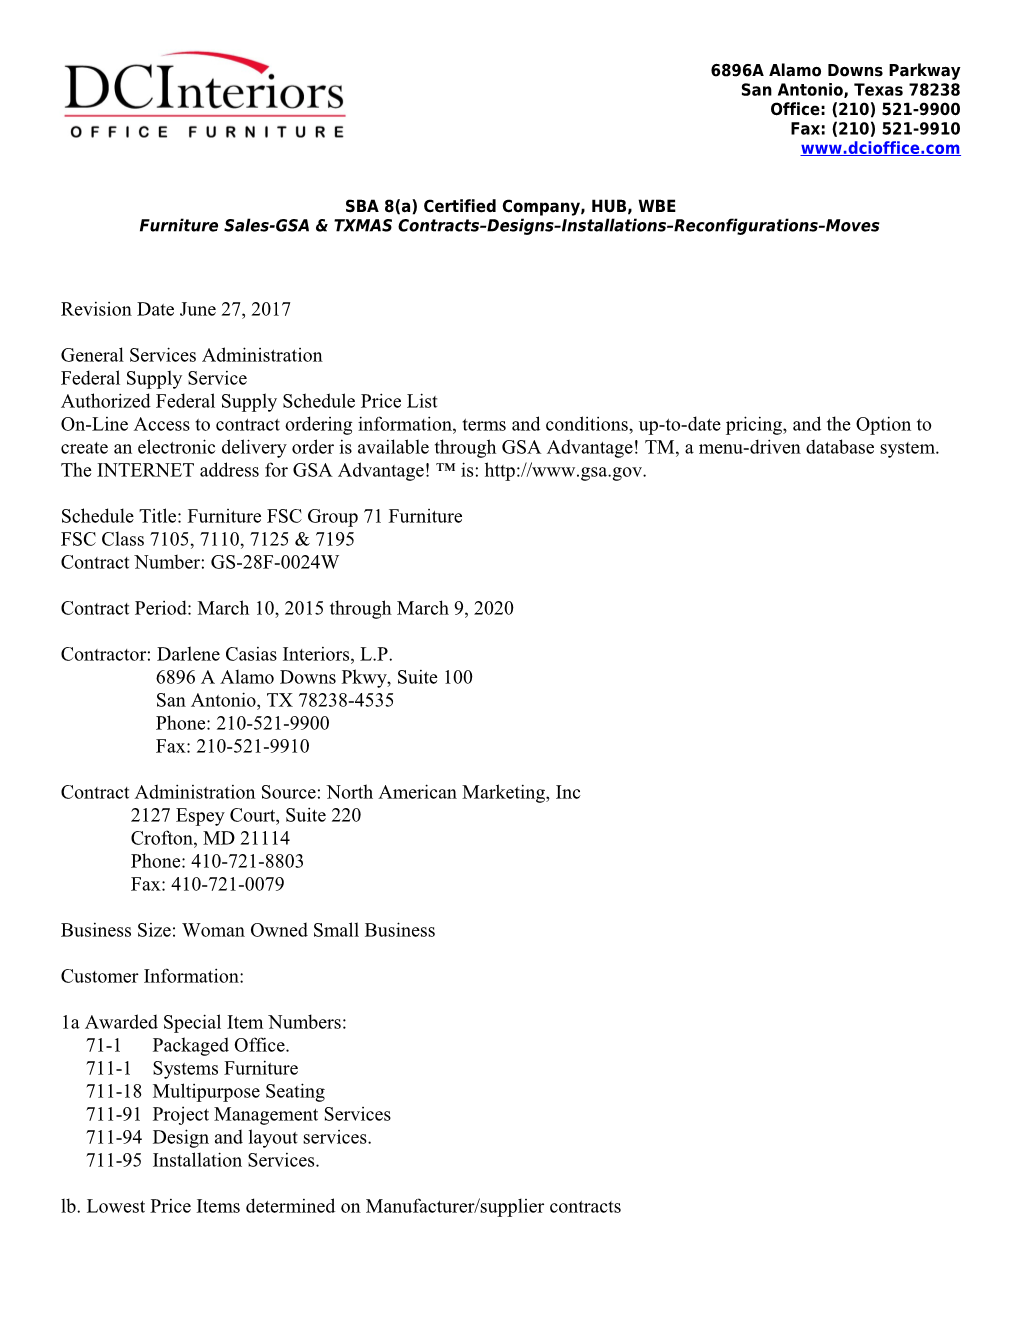 SBA 8(A) Certified Company, HUB, WBE